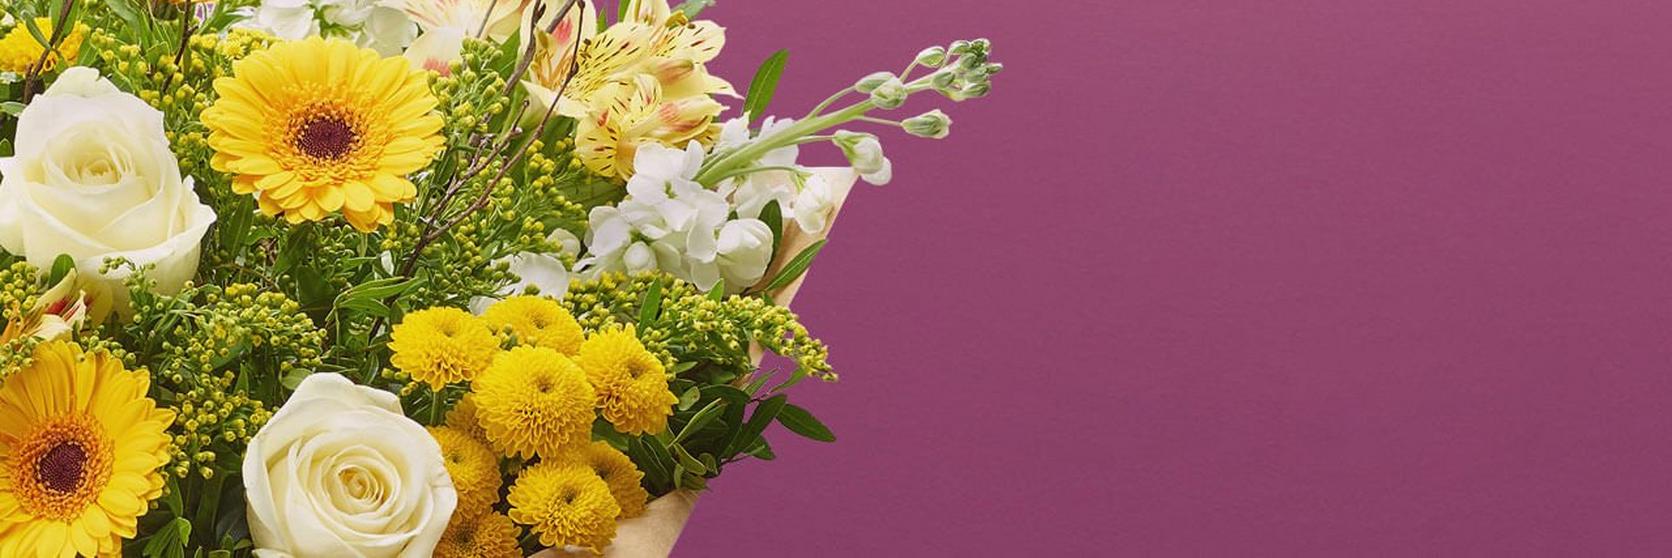 Interflora-bright-spring-yellow-white-bouquet